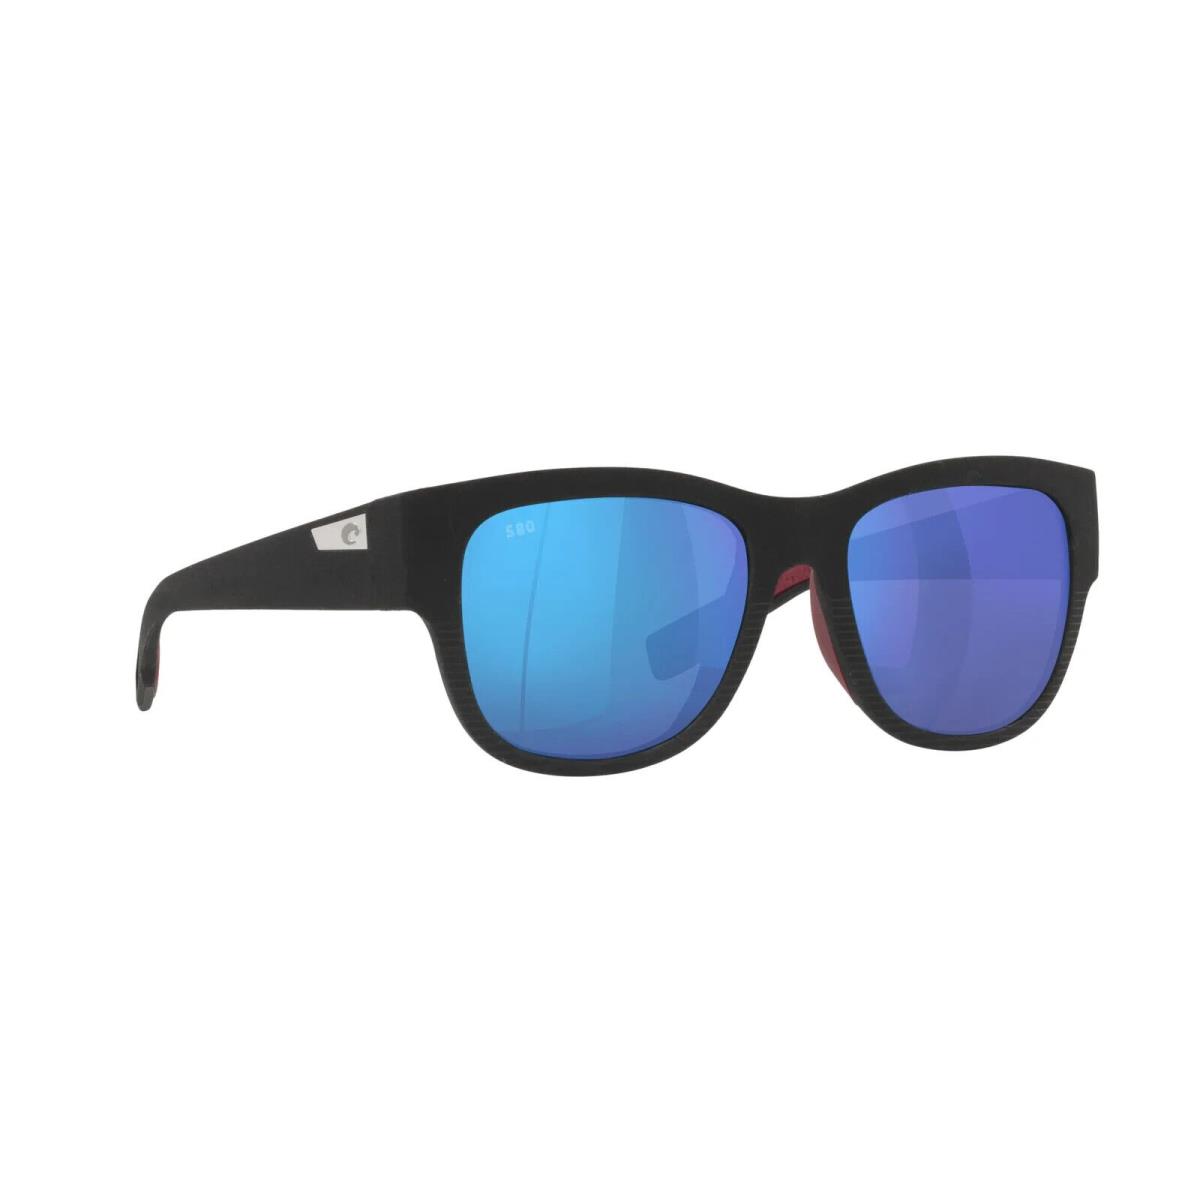 Costa Del Mar UC5 04G Obmglp Caleta Sunglasses Net Black Mirror 580G Polarized - Frame: Black